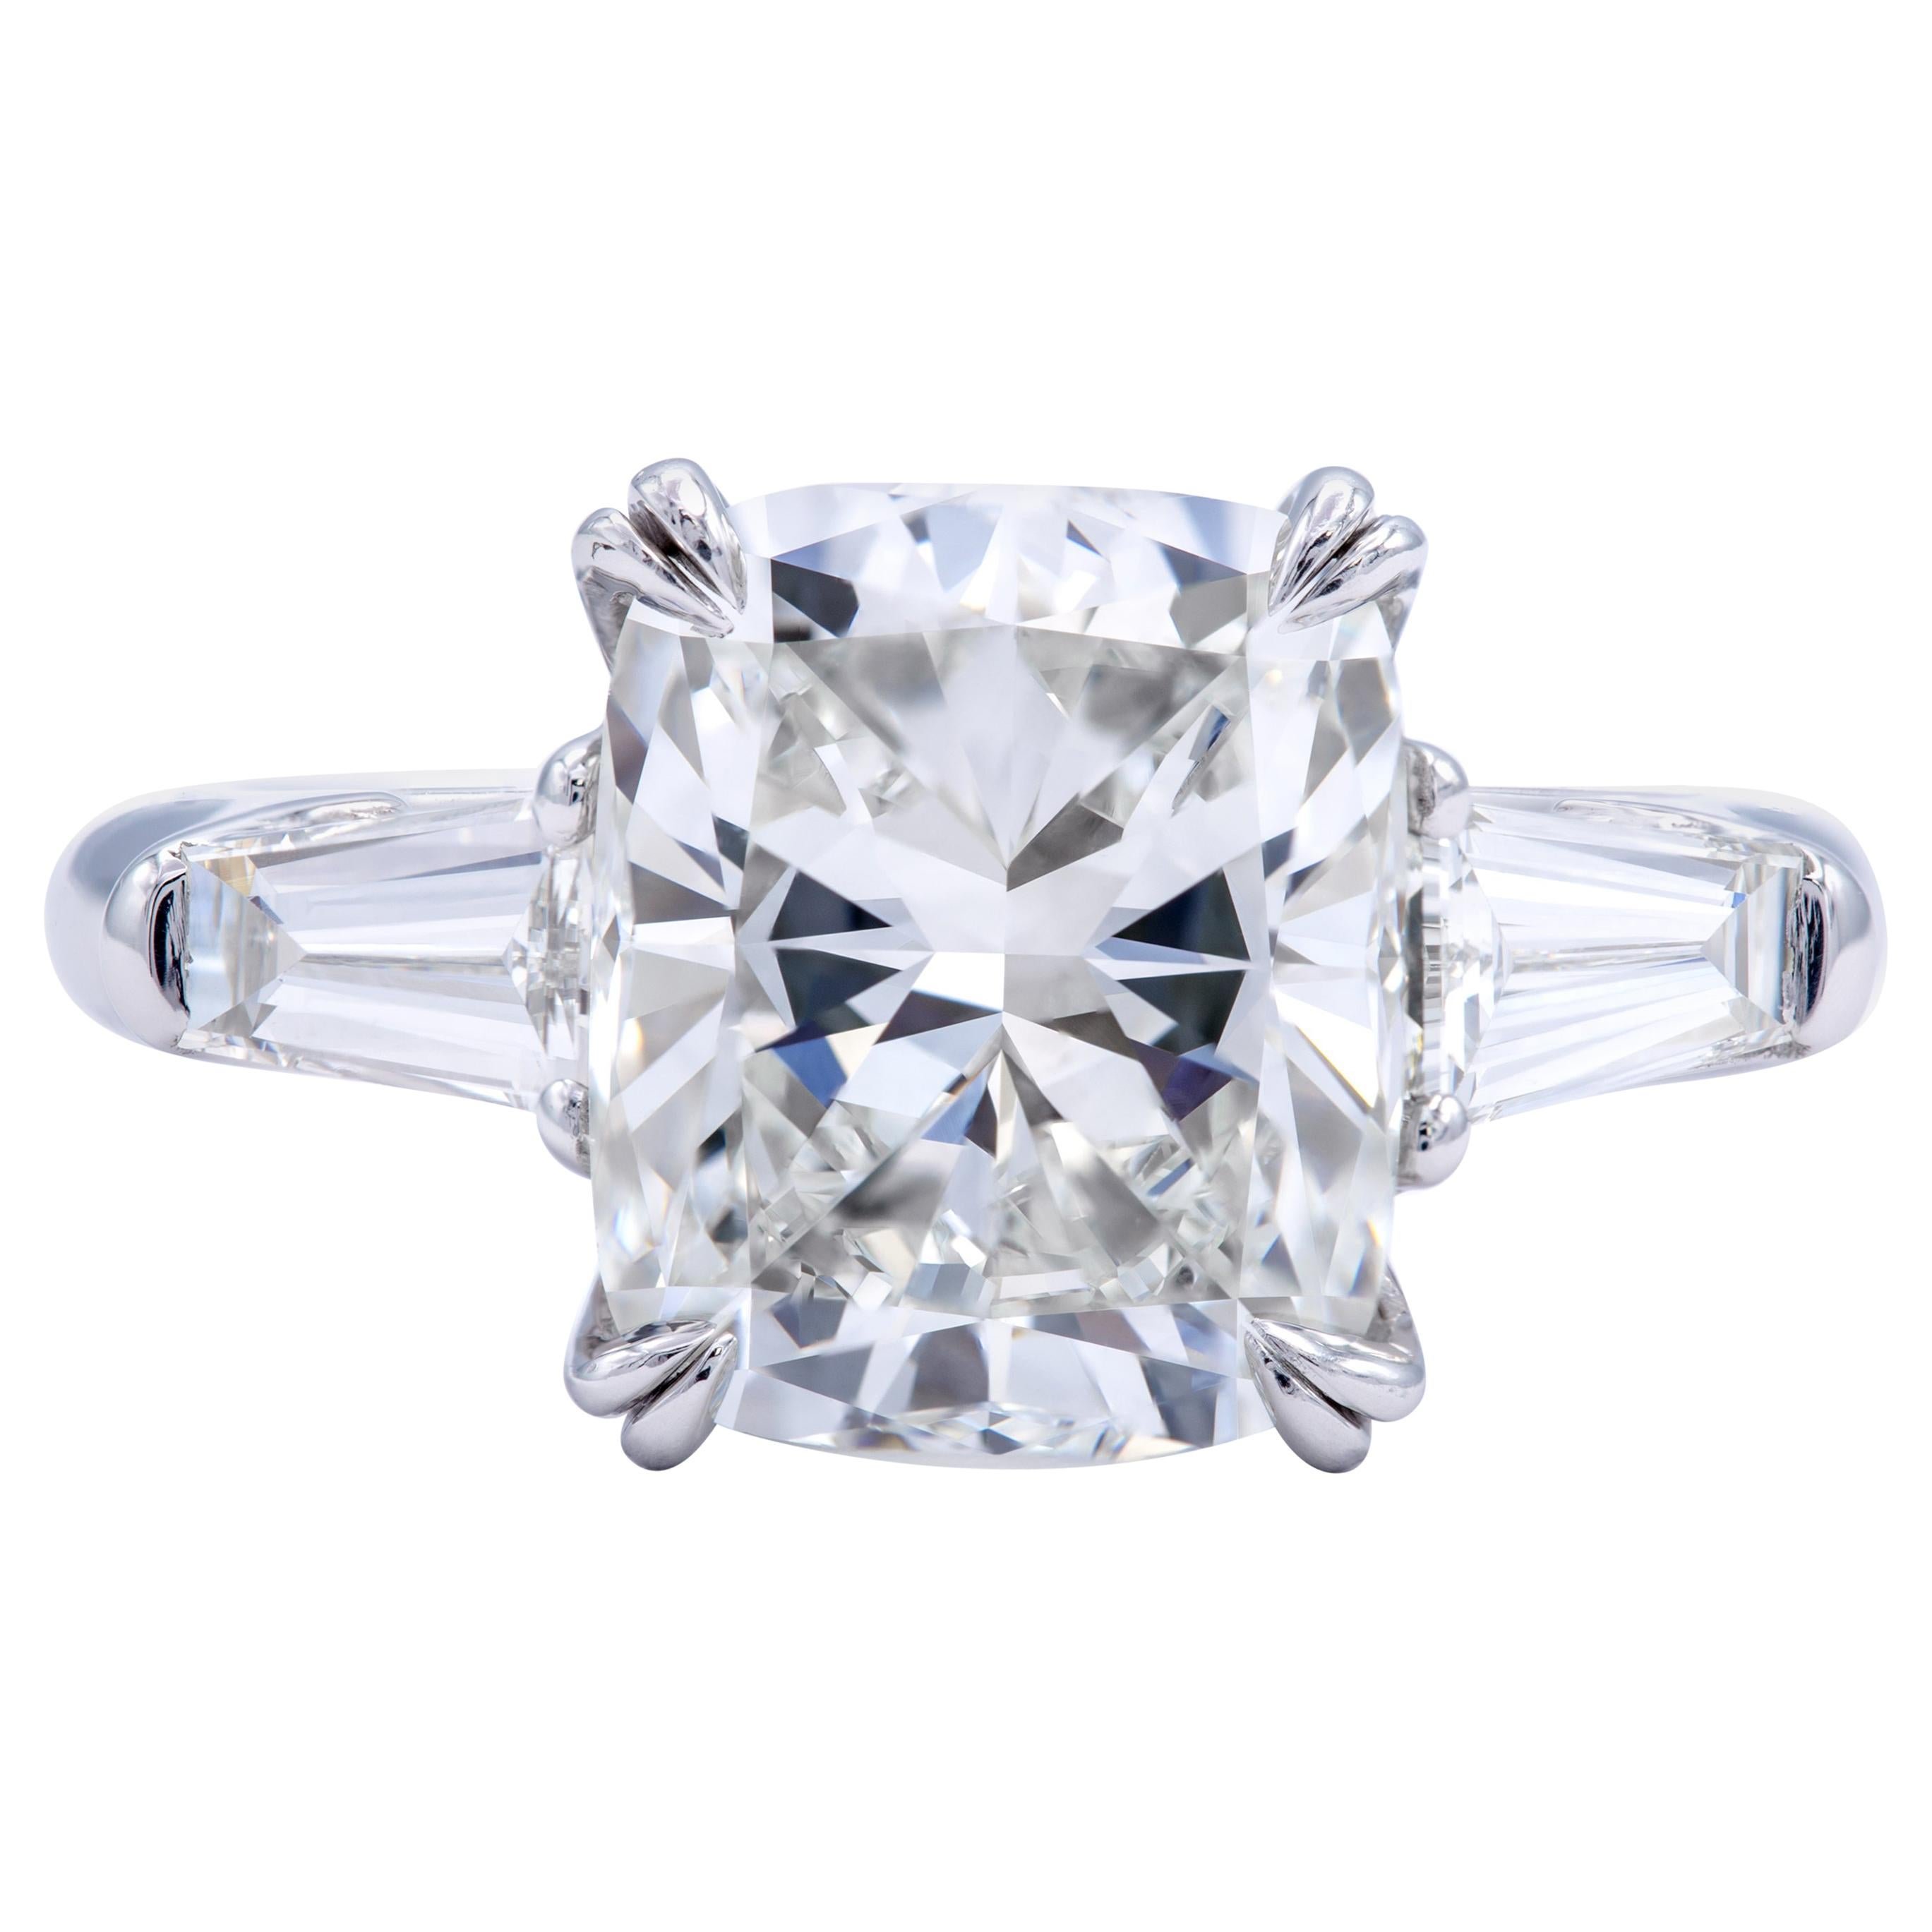 David Rosenberg 4.12 Carat Cushion Cut GIA Platinum Diamond Engagement Ring